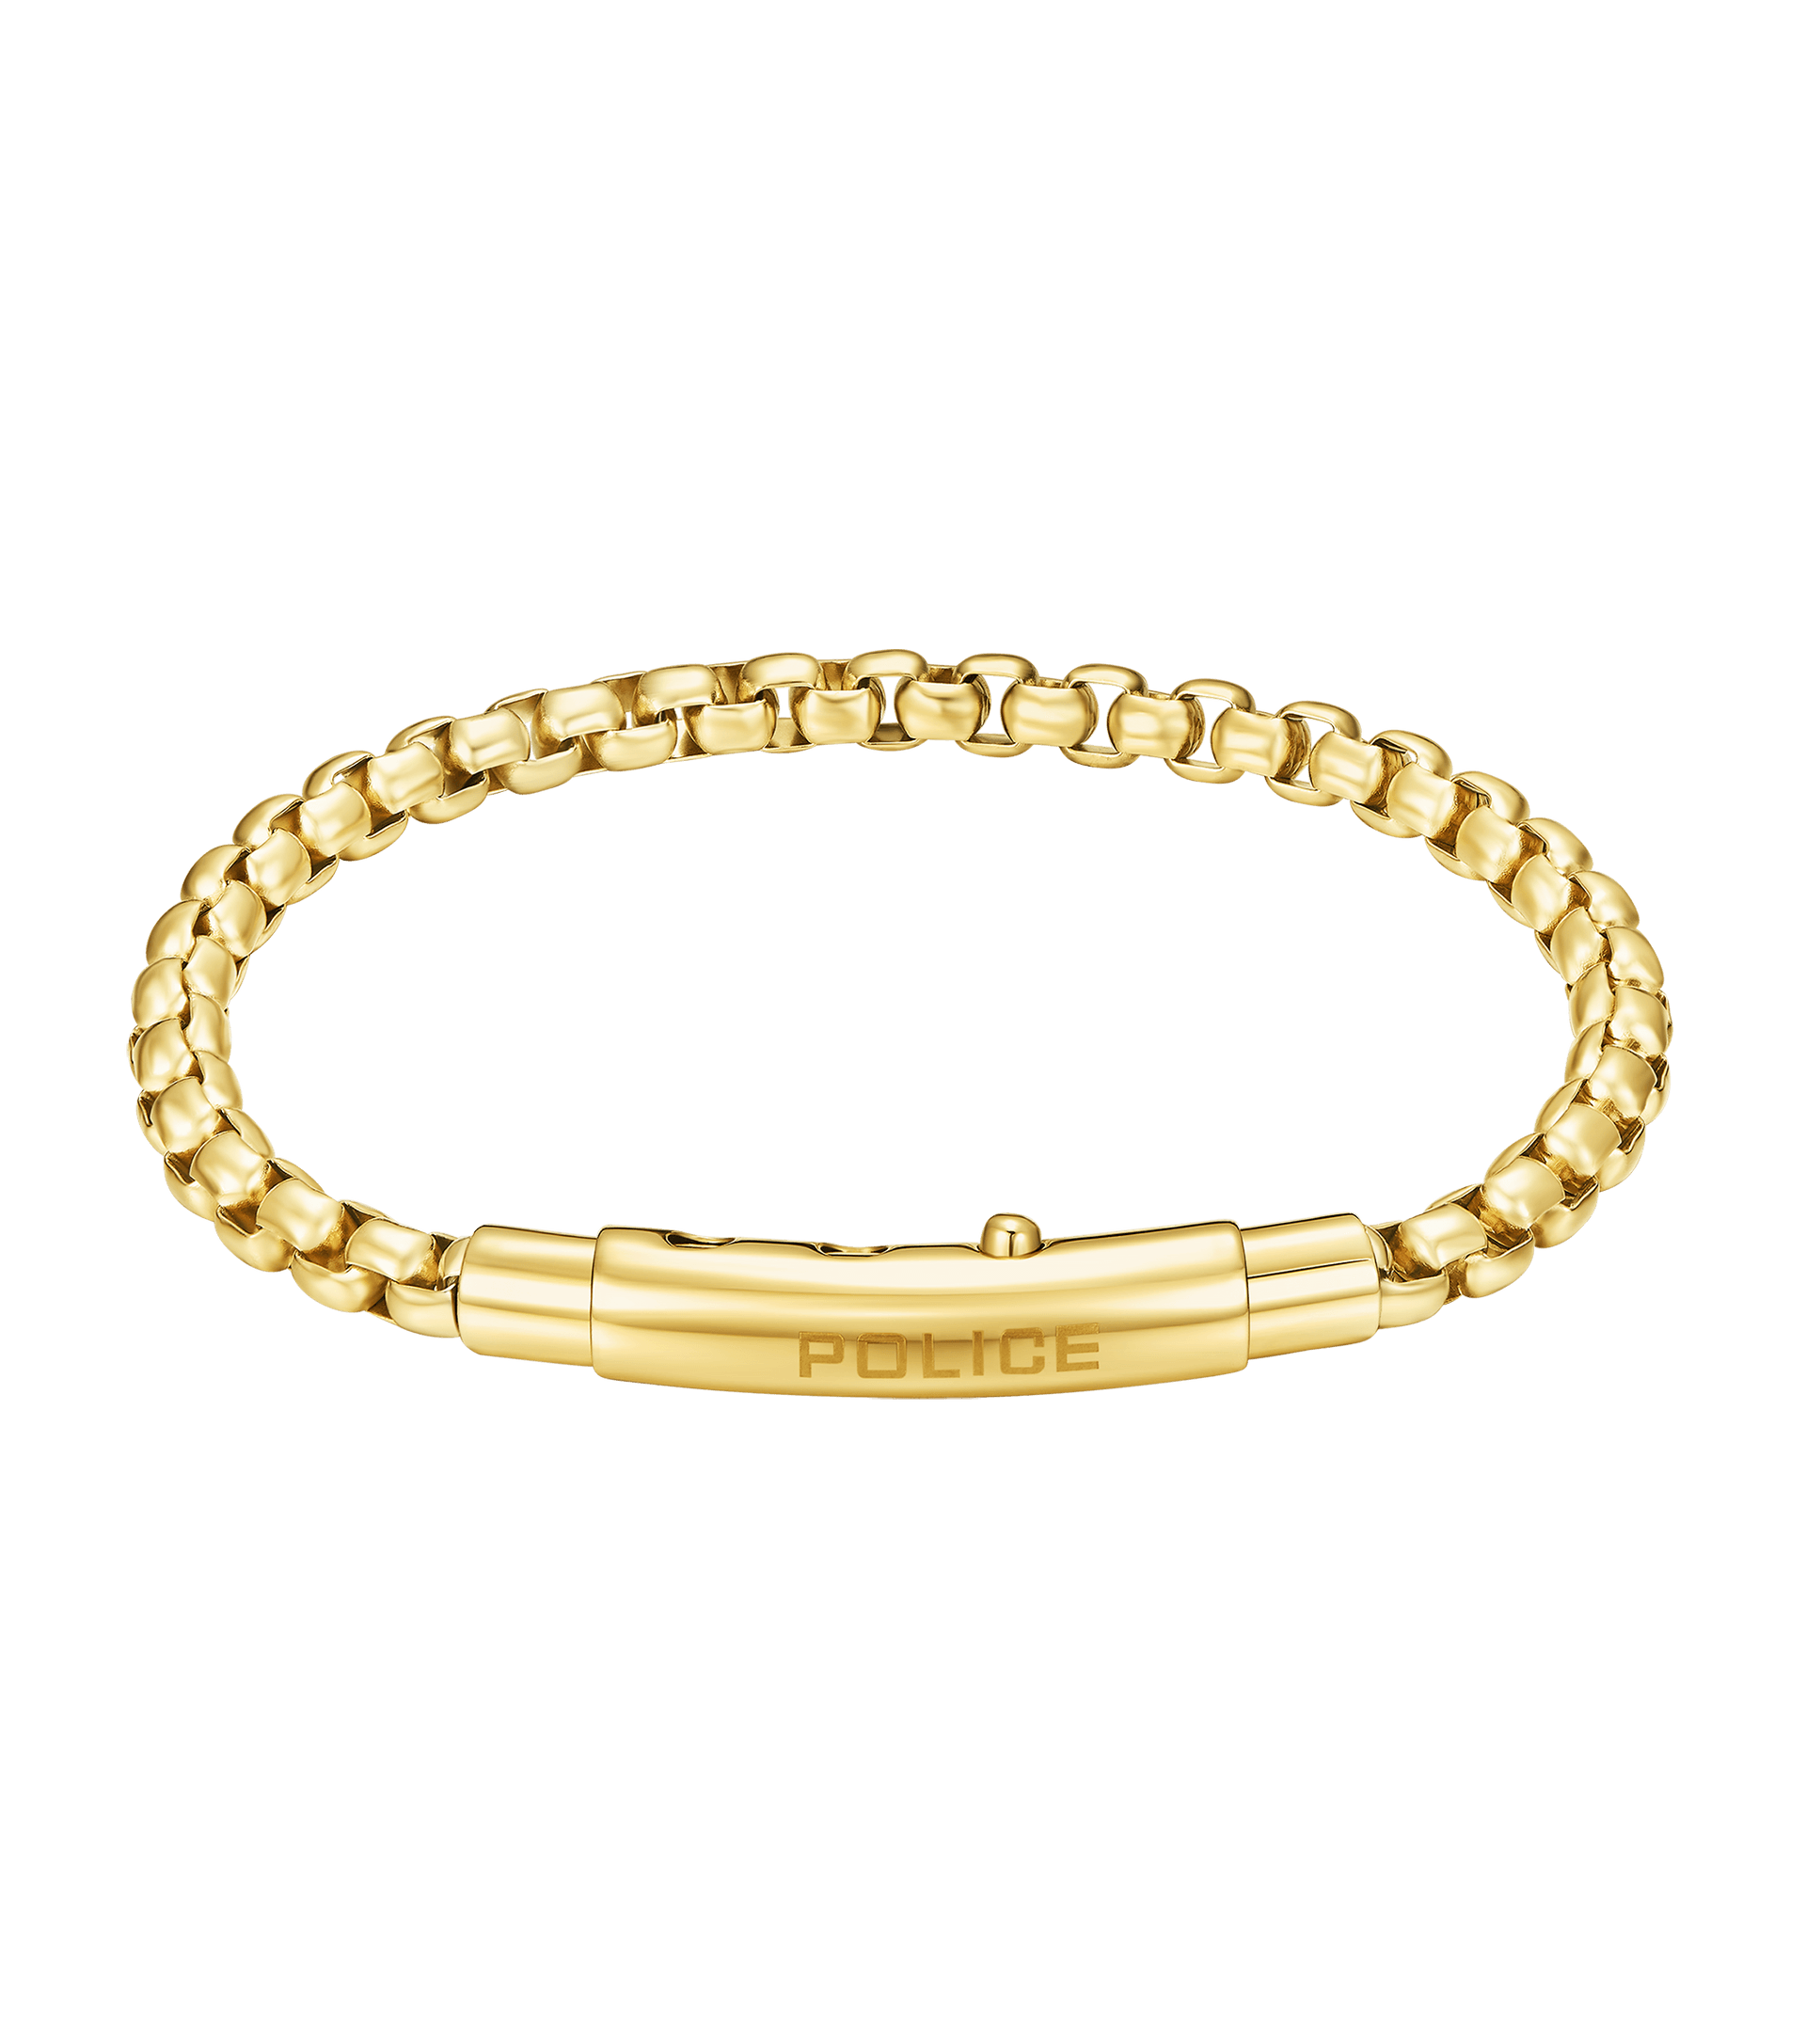 jewels Barbedwire Bracelet By Police For PEJGB2112301 - Police Men